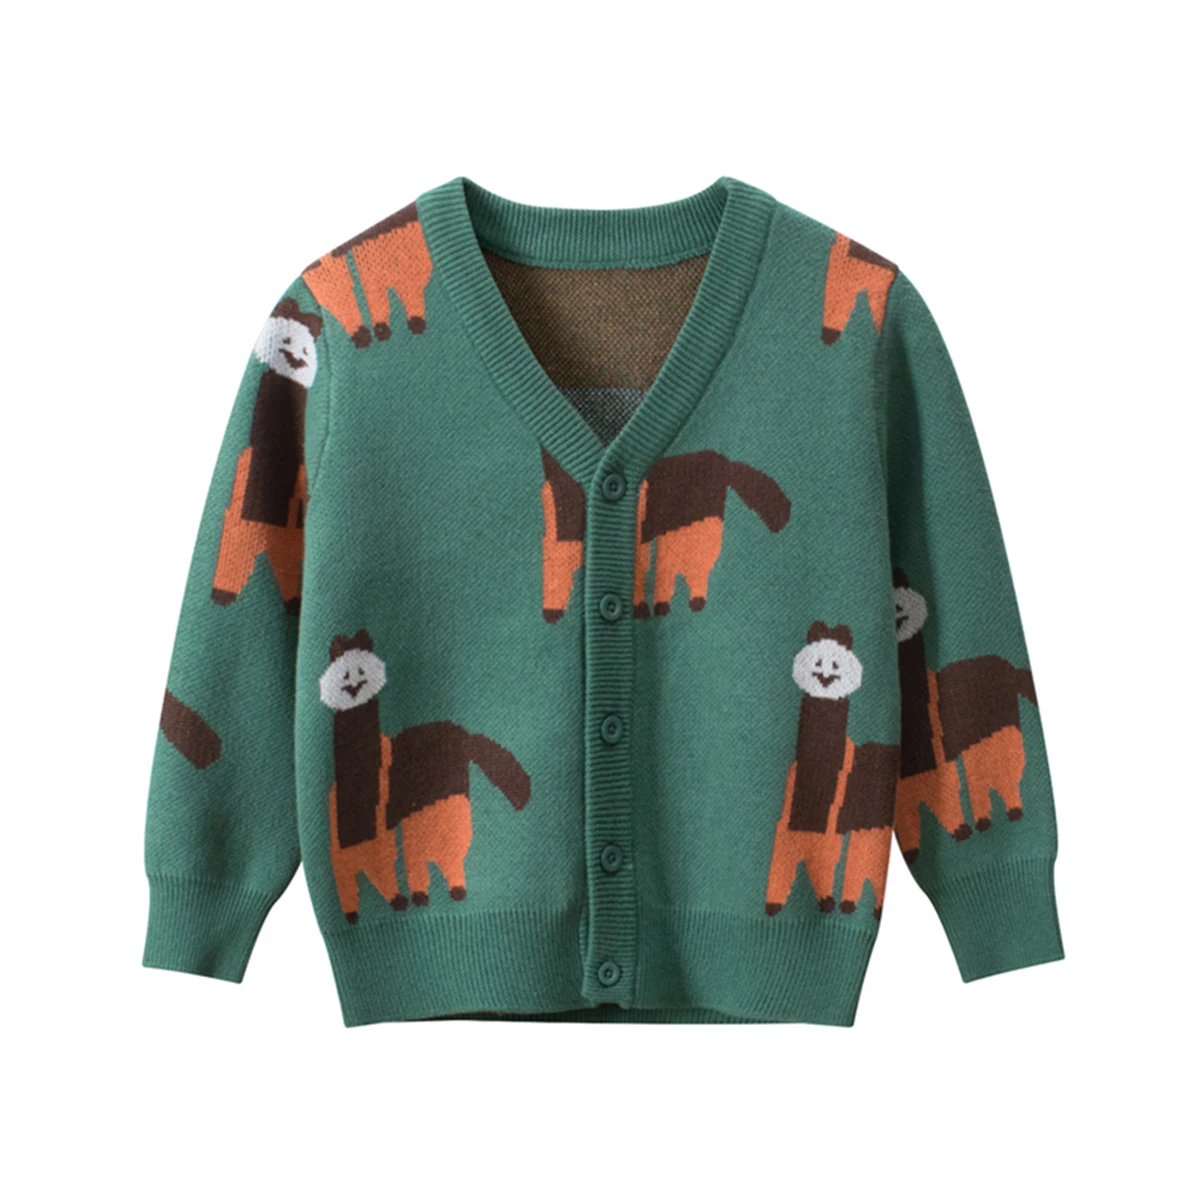 

Little Boys Girls Cartoon Animal Cardigan Sweater Toddler Infant Whales Giraffe Snowman Long Sleeves Knitted Sweater Jacket